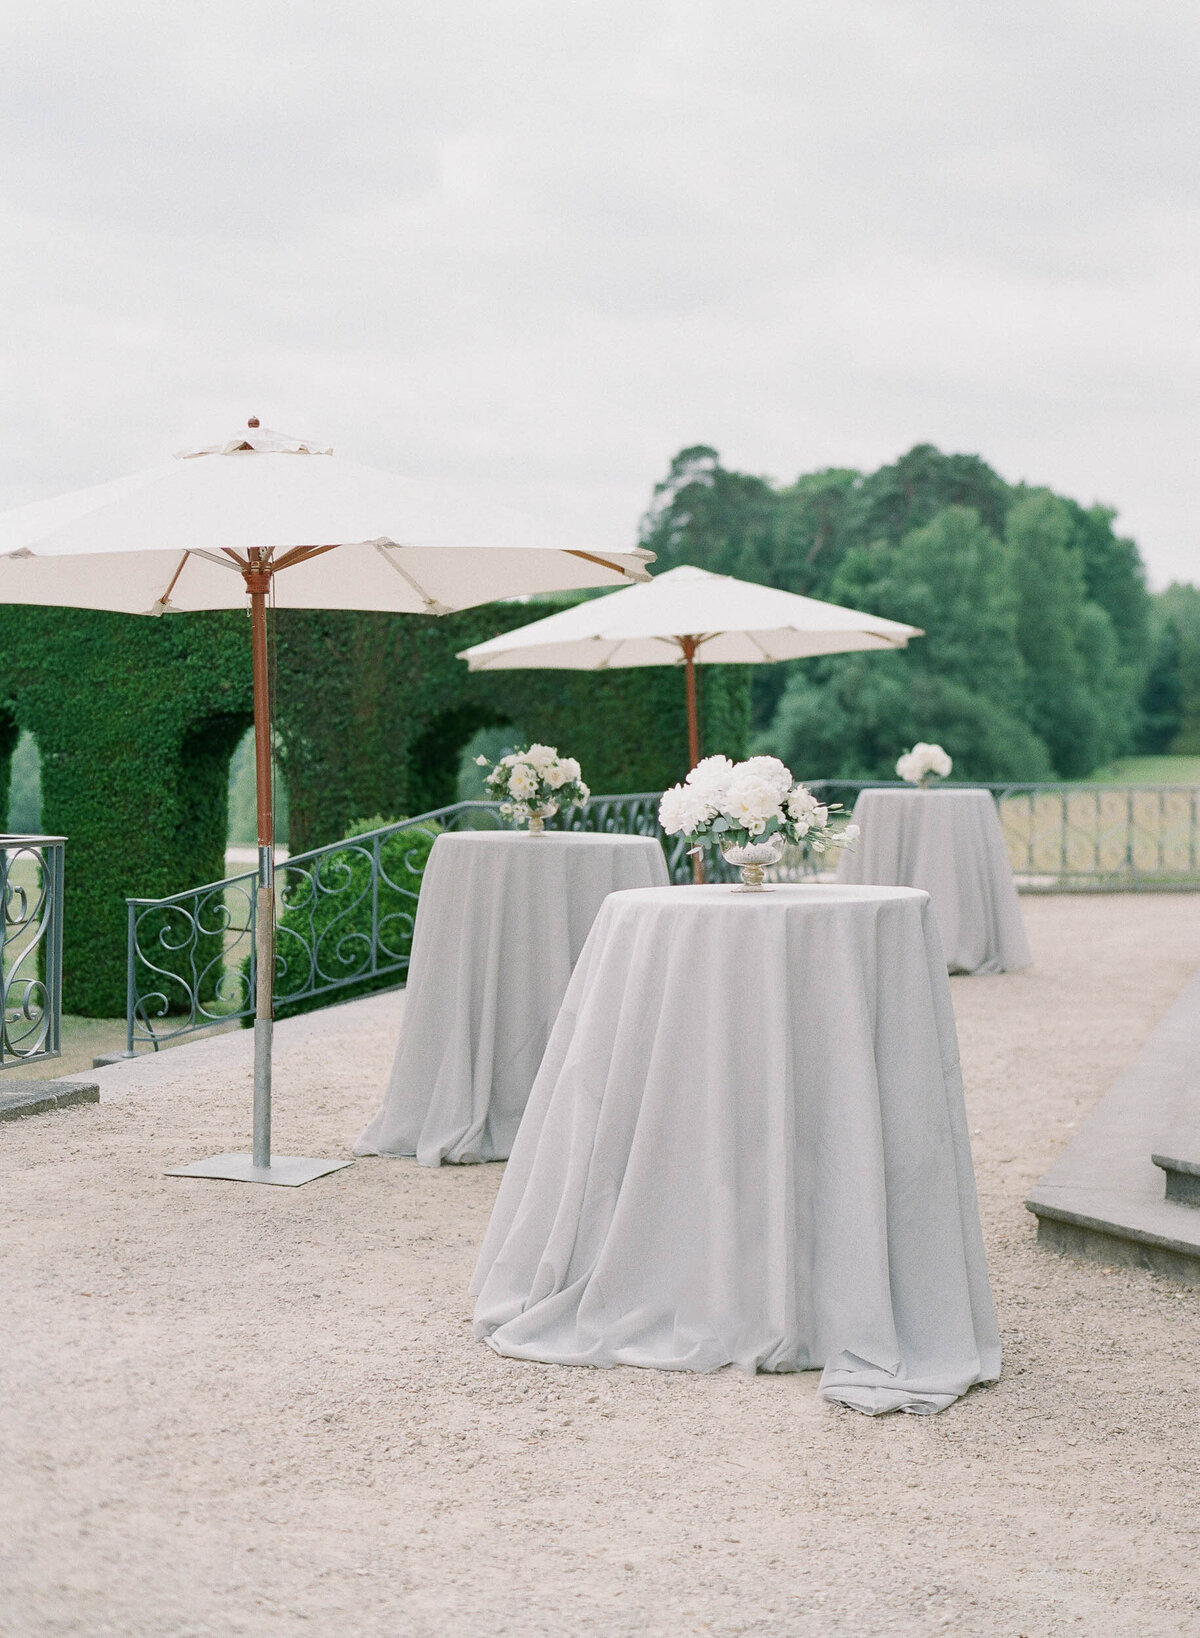 35-Alexandra-Vonk-photography-Chateau-de-la-hulpe-wedding